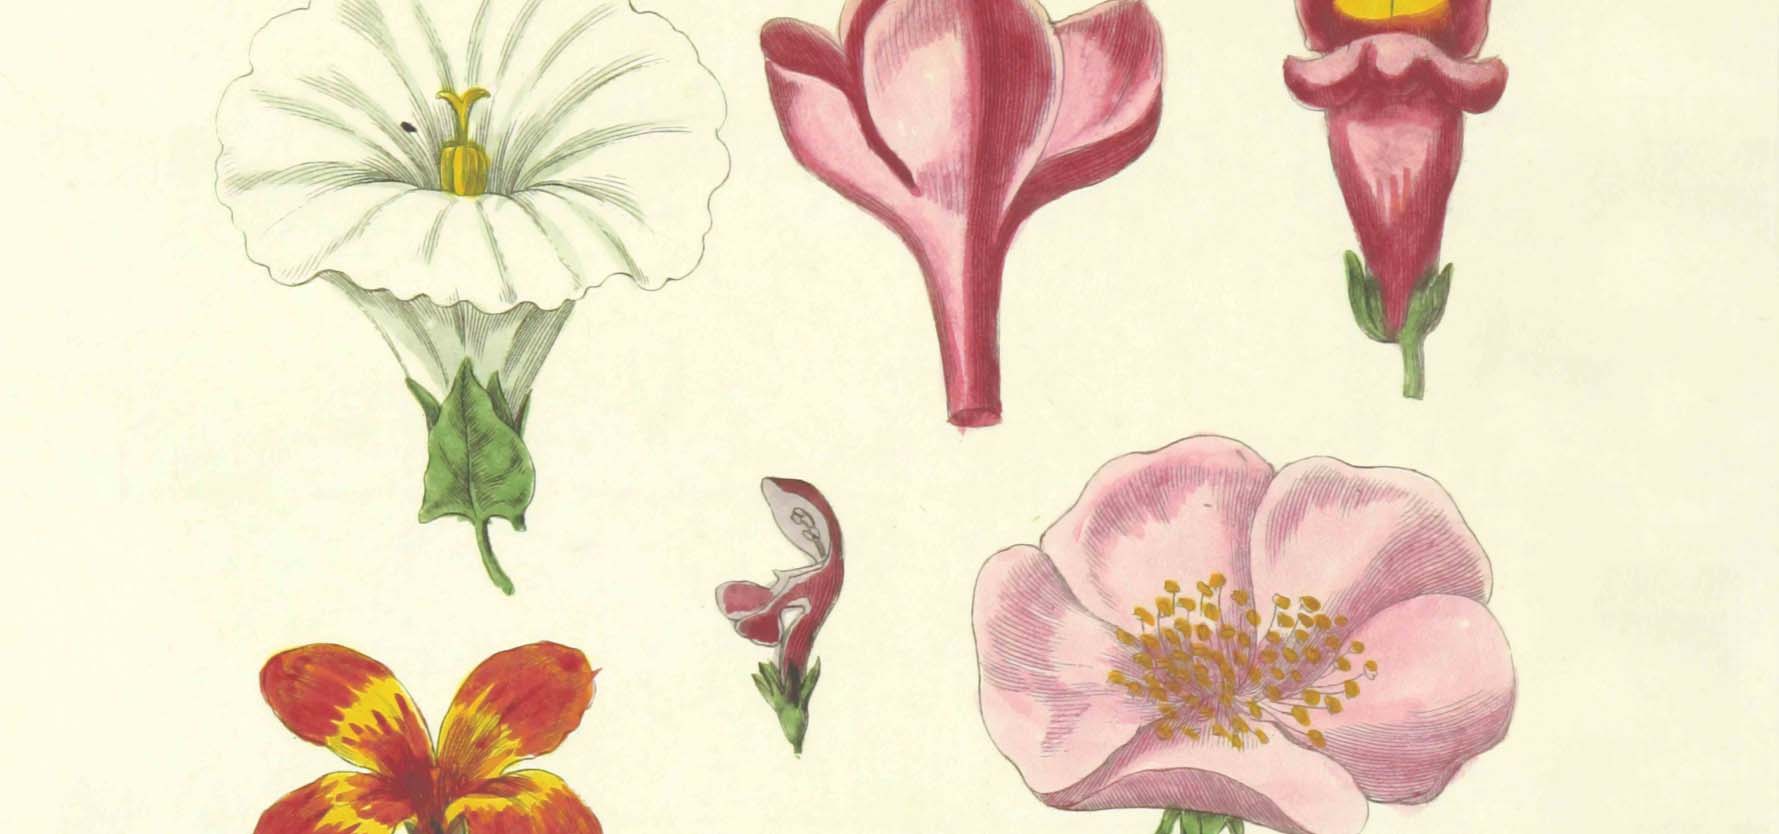 Botanical illustration showing various flower blooms.